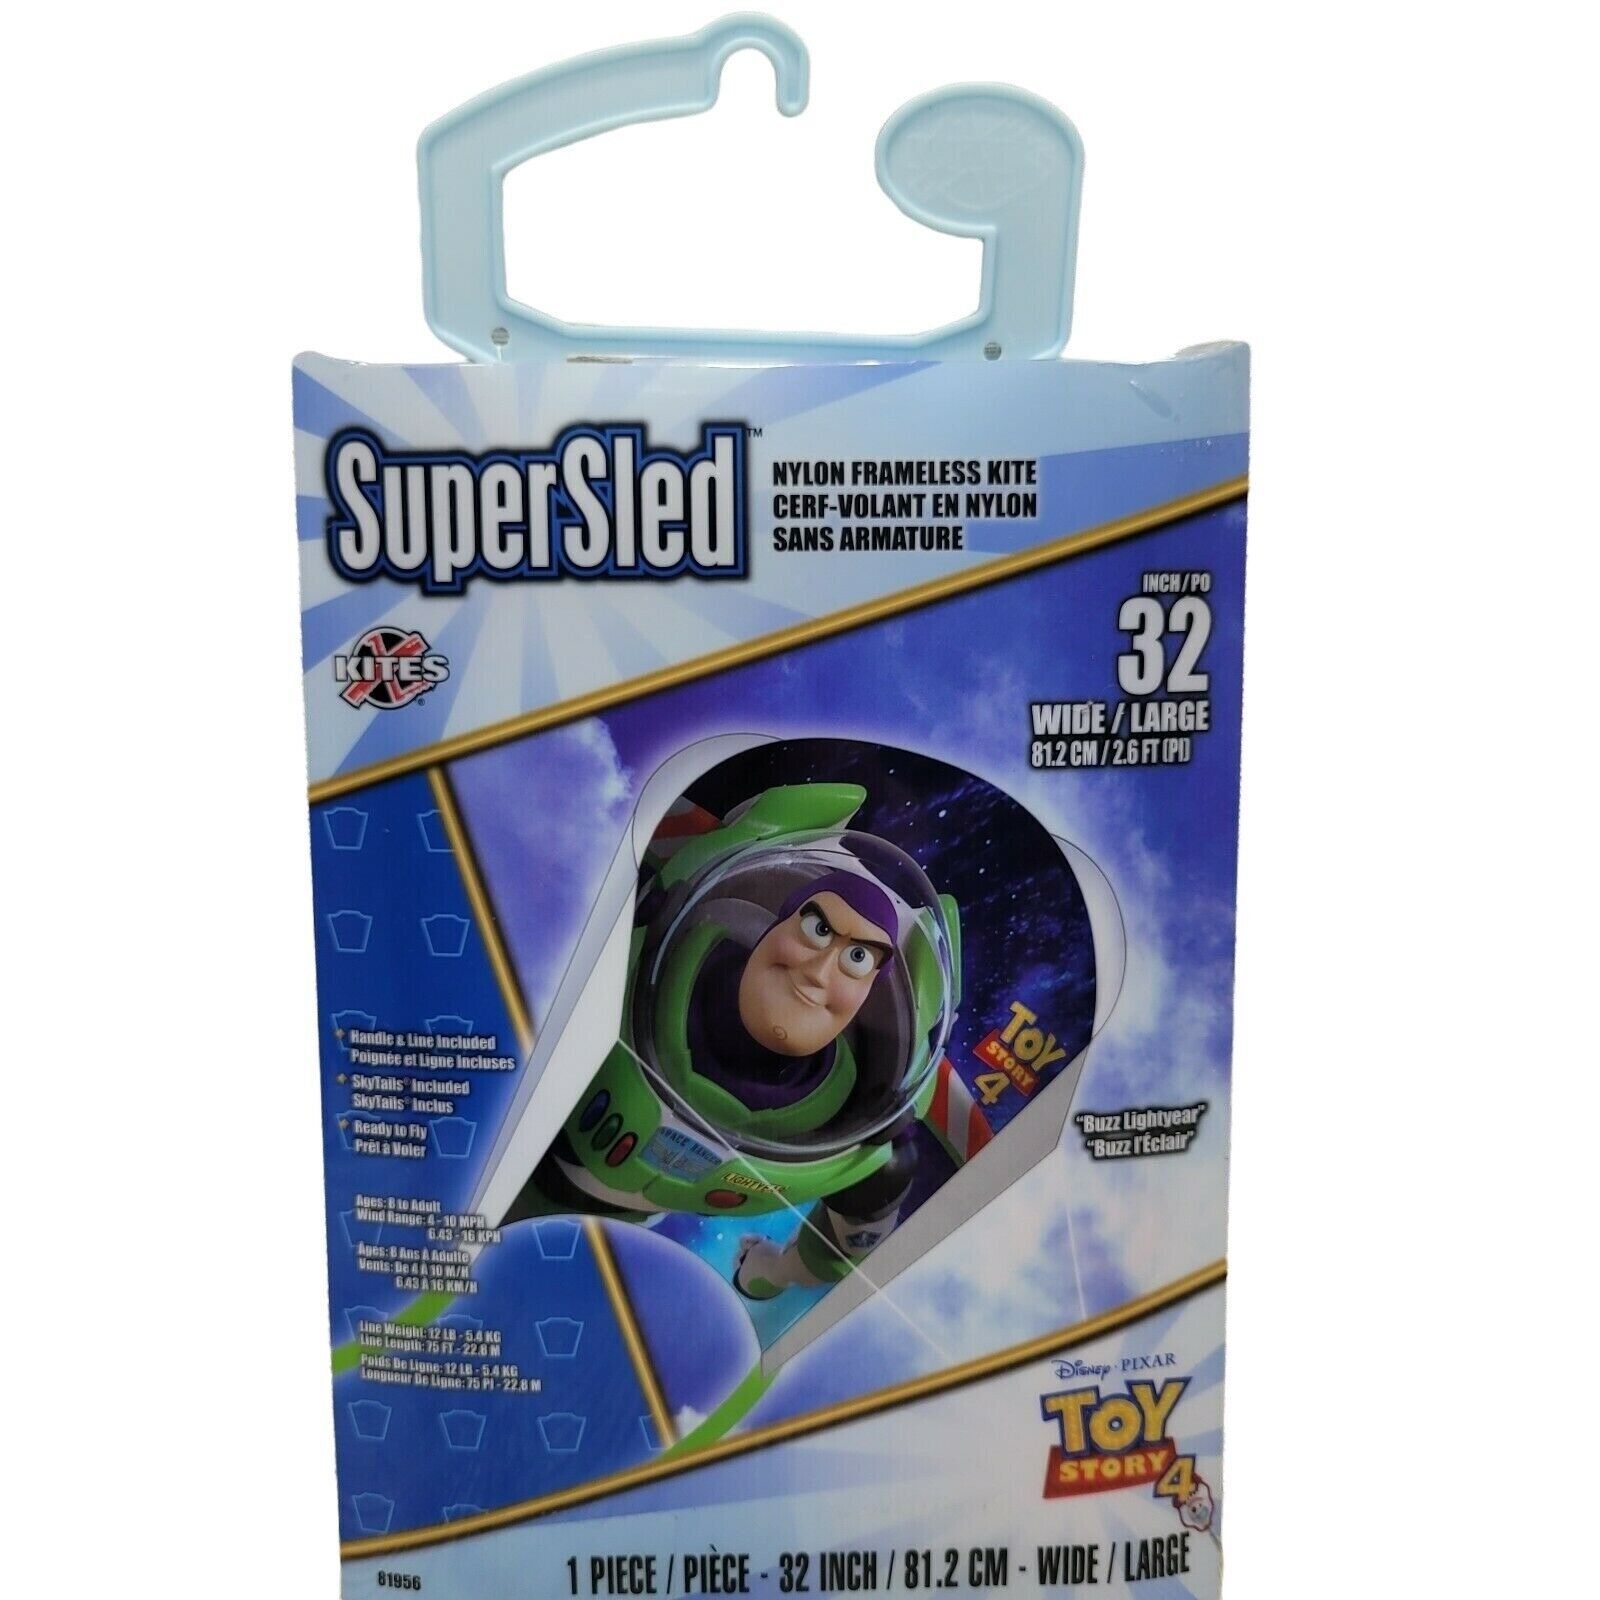 Disney Toy Story Buzz Lightyear Kite X Kites Super Sled Nylon Outdoor Toy - $6.99